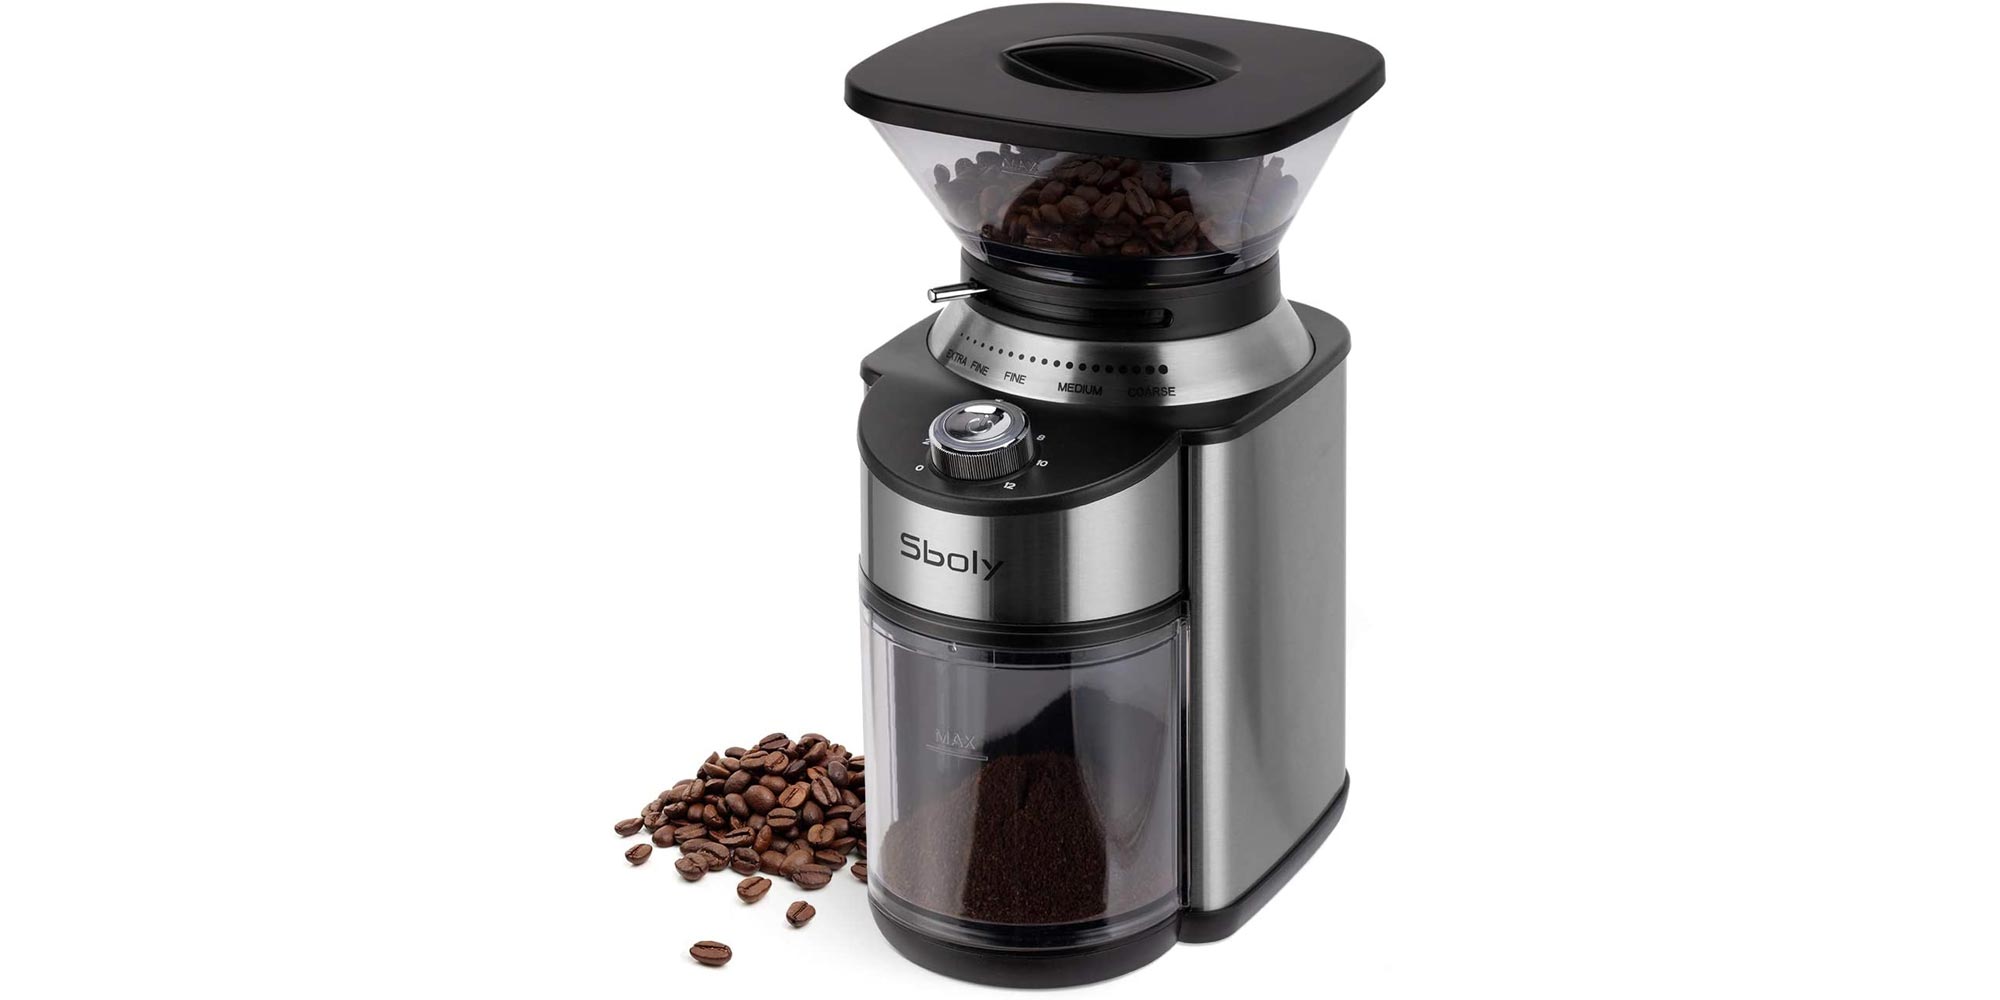 https://9to5toys.com/wp-content/uploads/sites/5/2021/03/sboly-burr-coffee-grinder.jpg